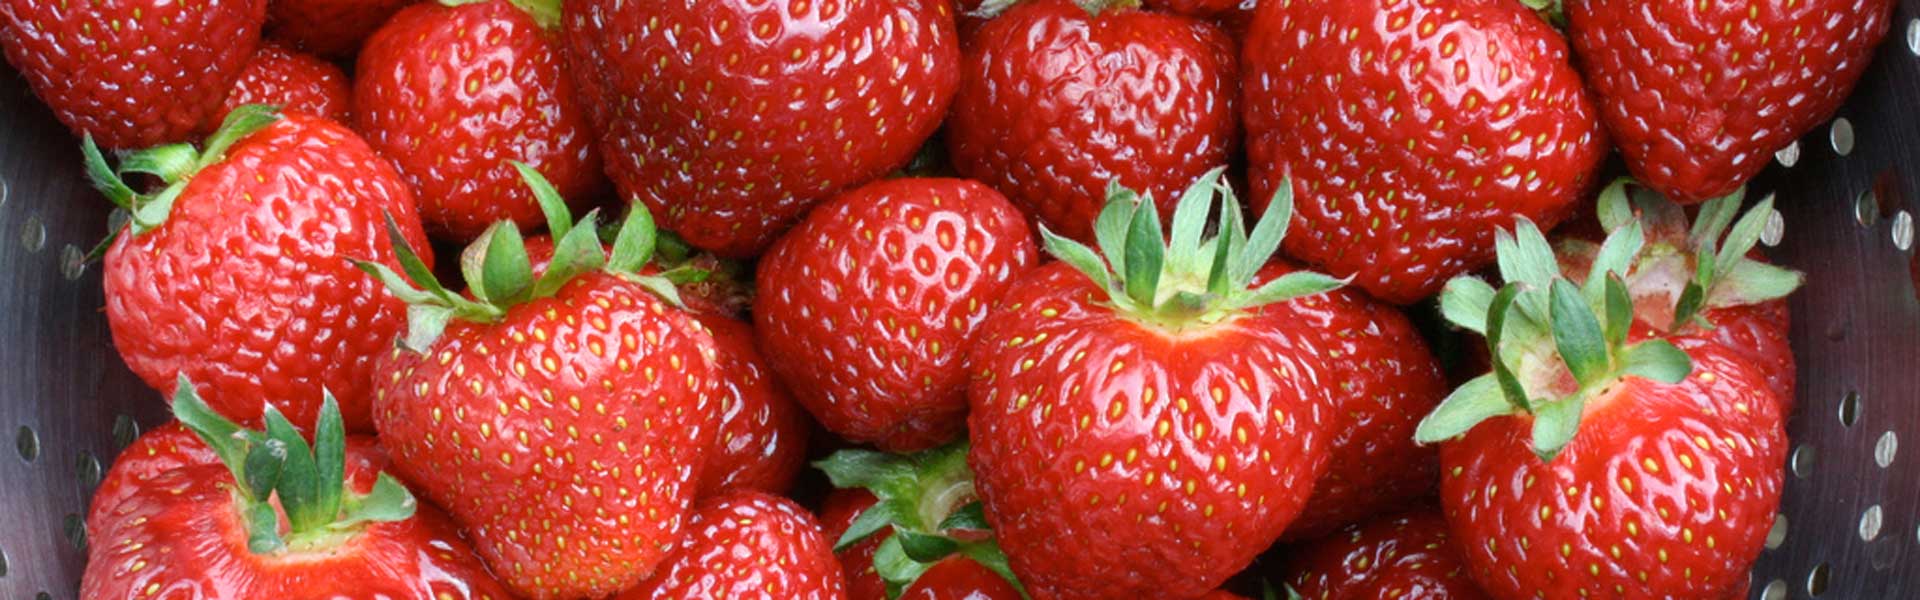 8476-red-strawberries